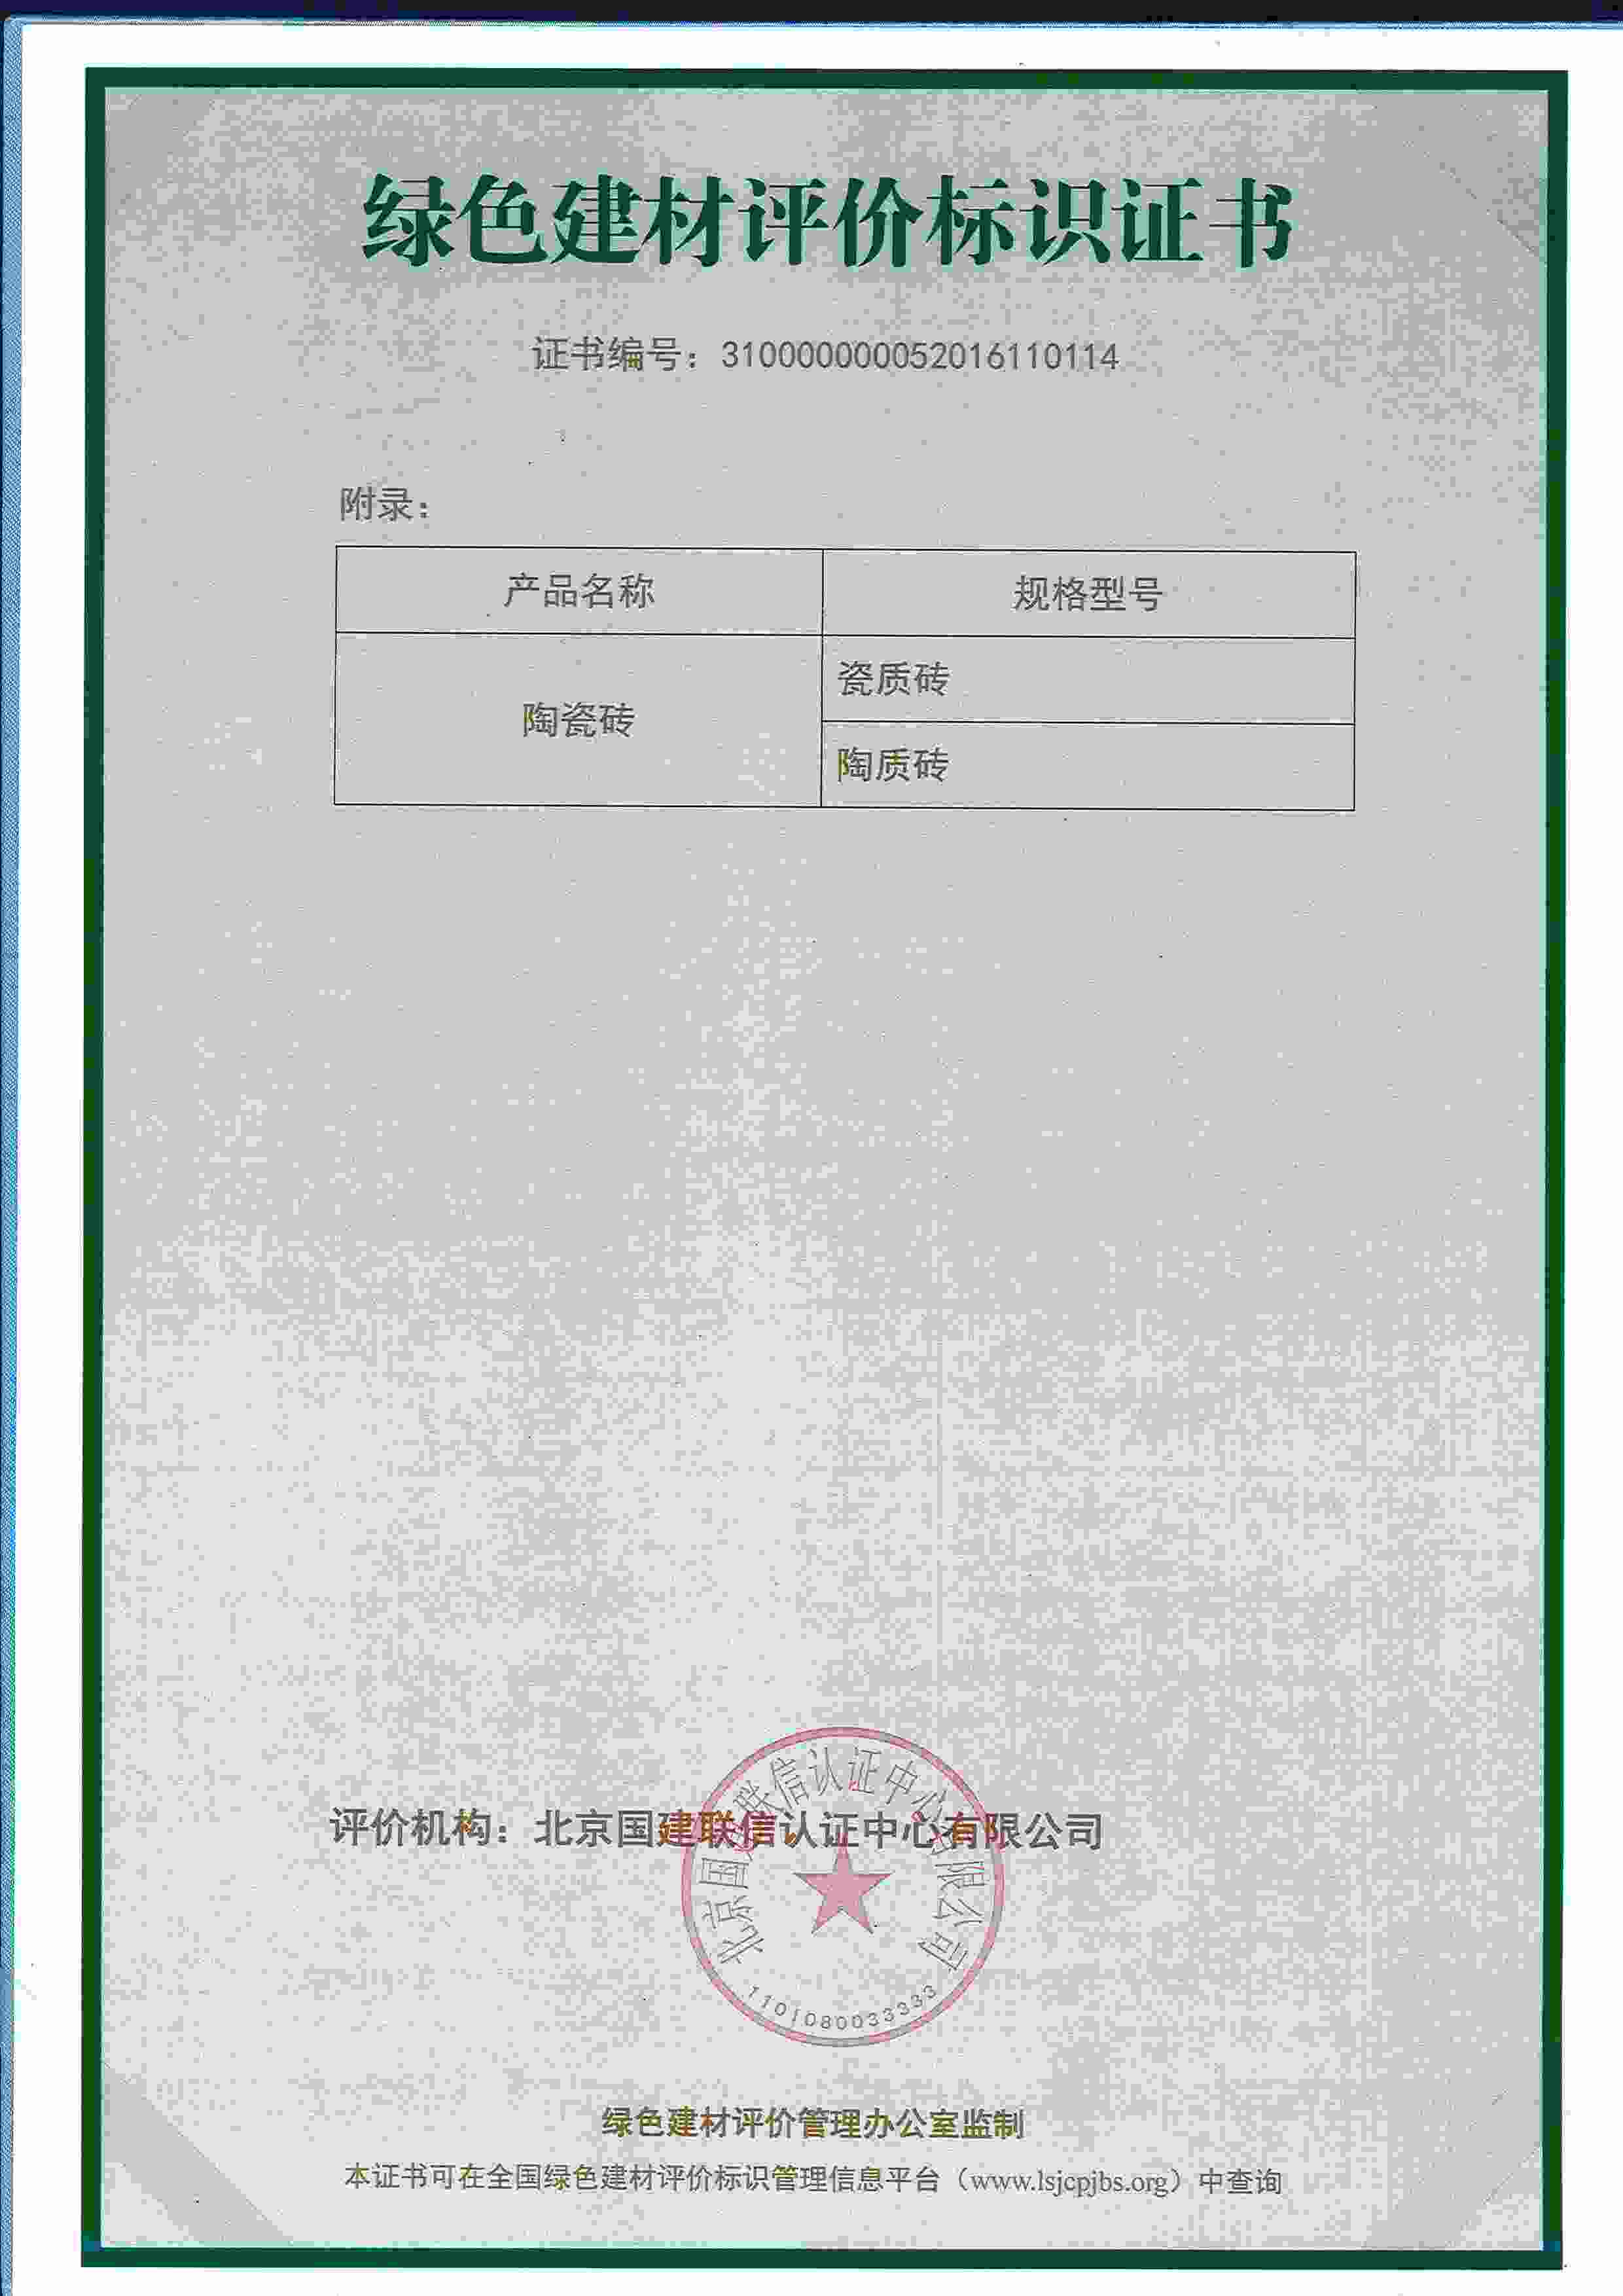 Green Building Materials Evaluation Mark Certificate - Appendix